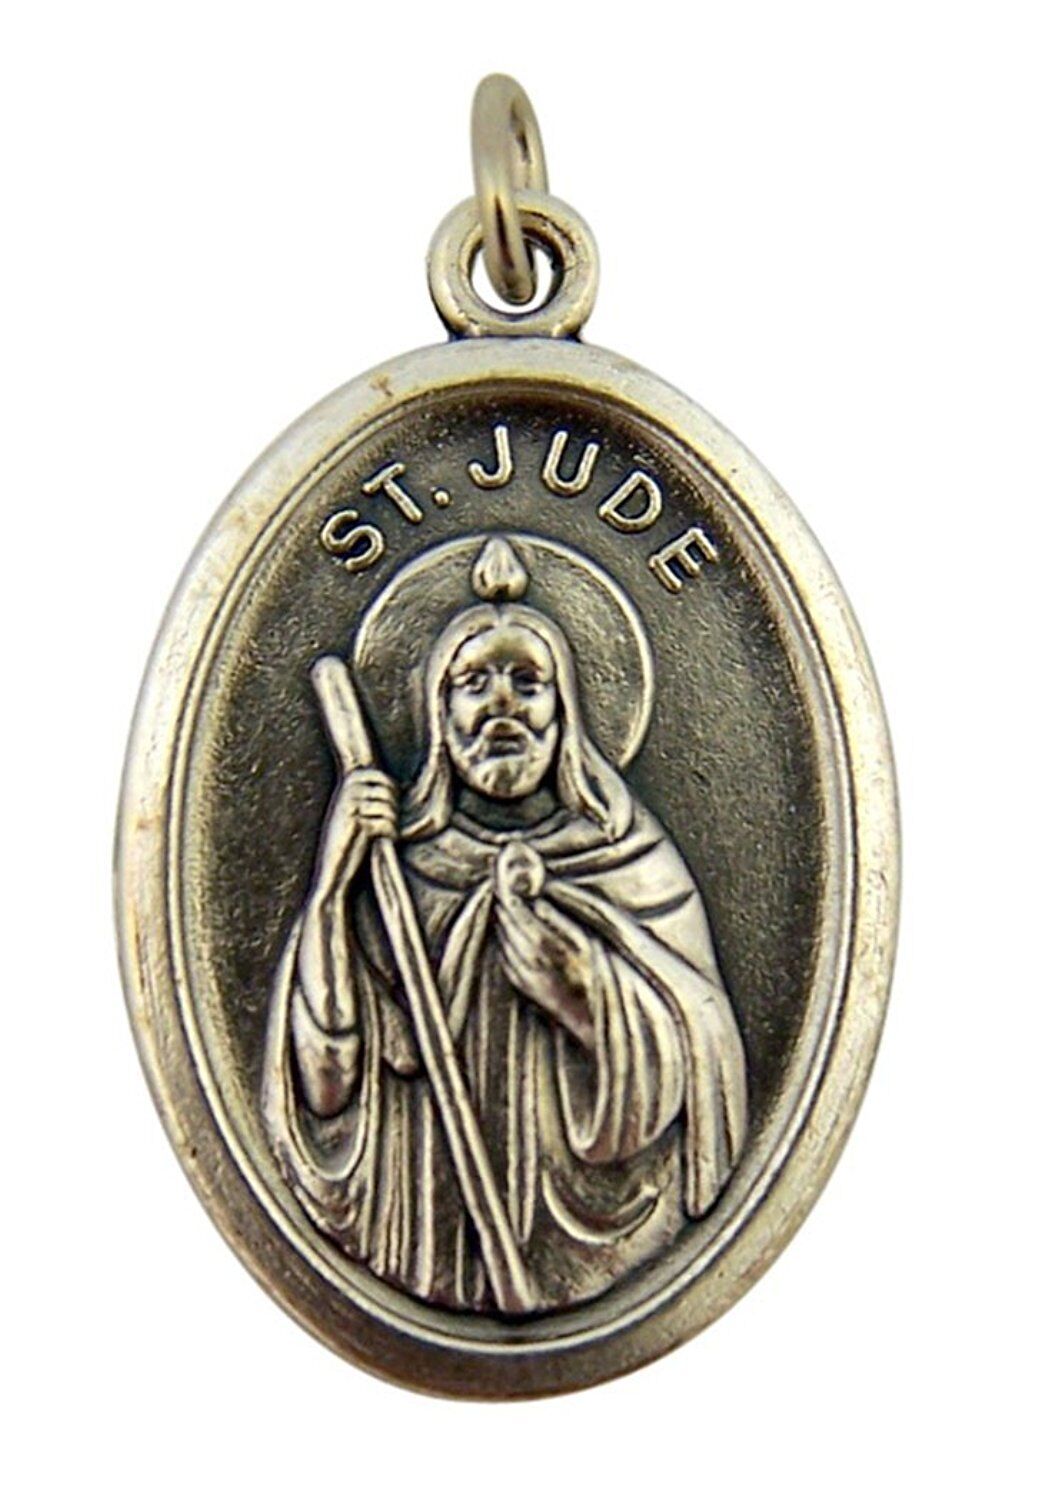 Silver Toned Base Catholic Saint St Jude the Apostle Medal Pendant, 1 Inch